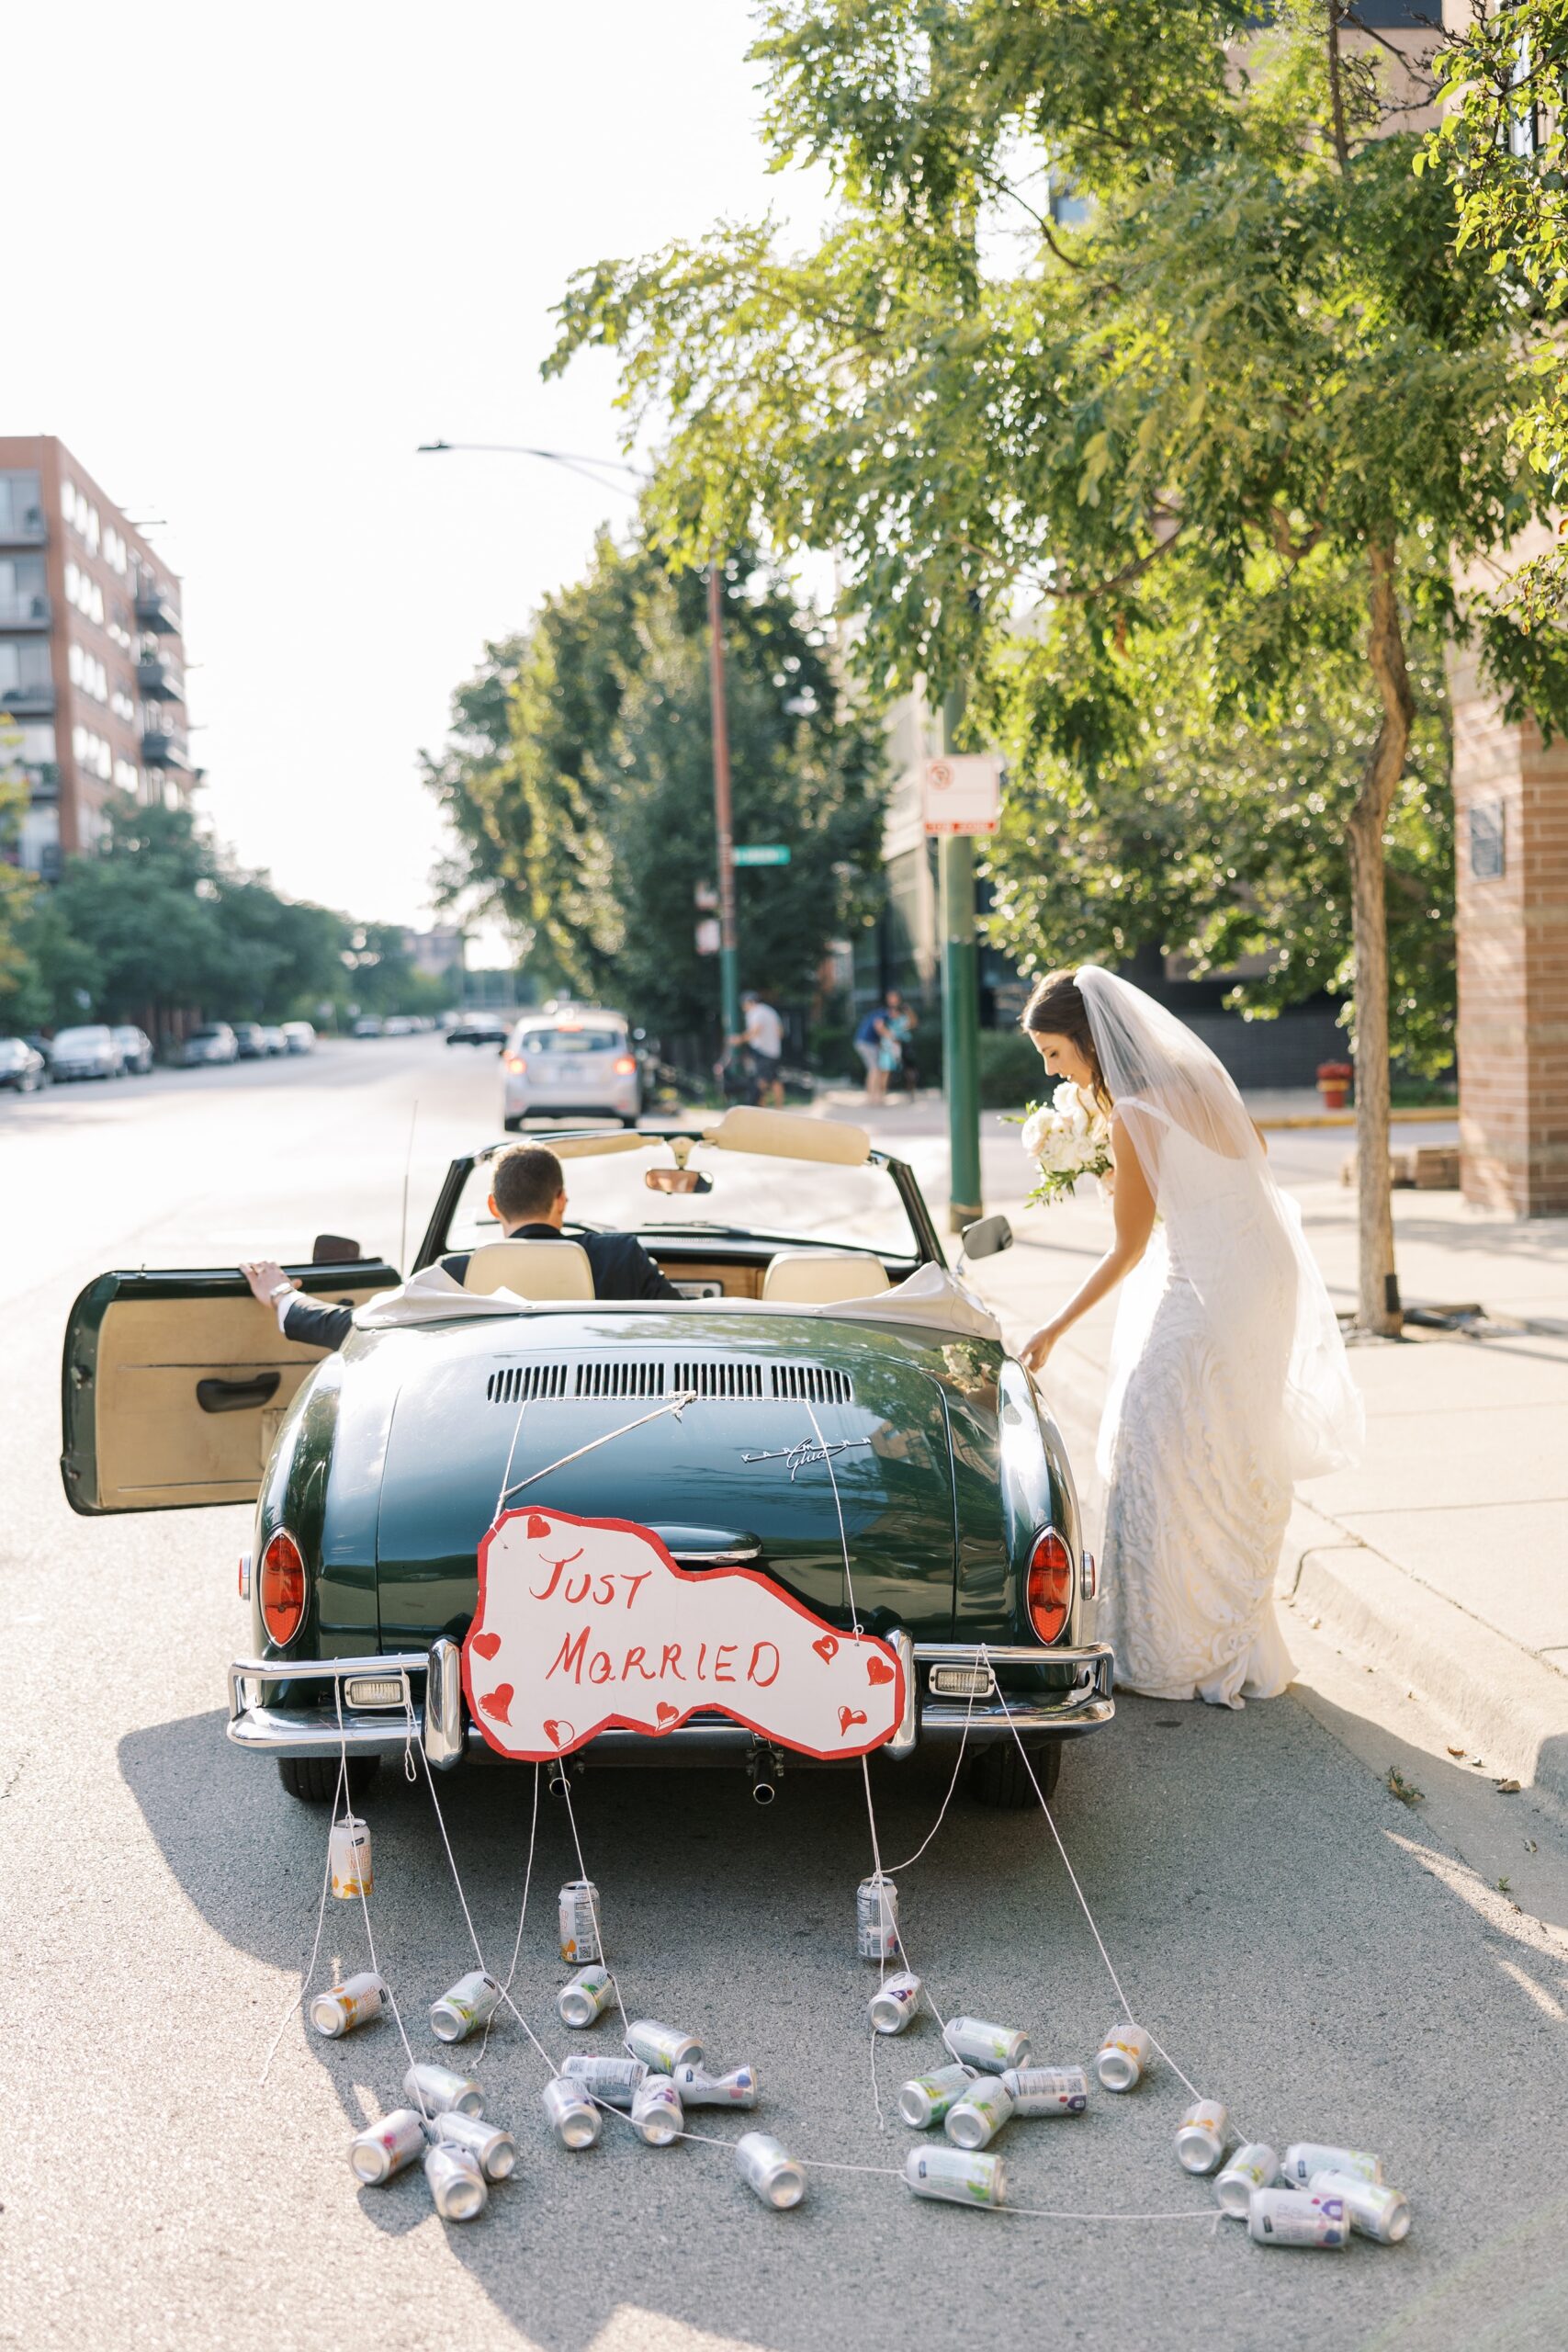 bride and groom get into vintage getaway car after their galleria Marchetti wedding